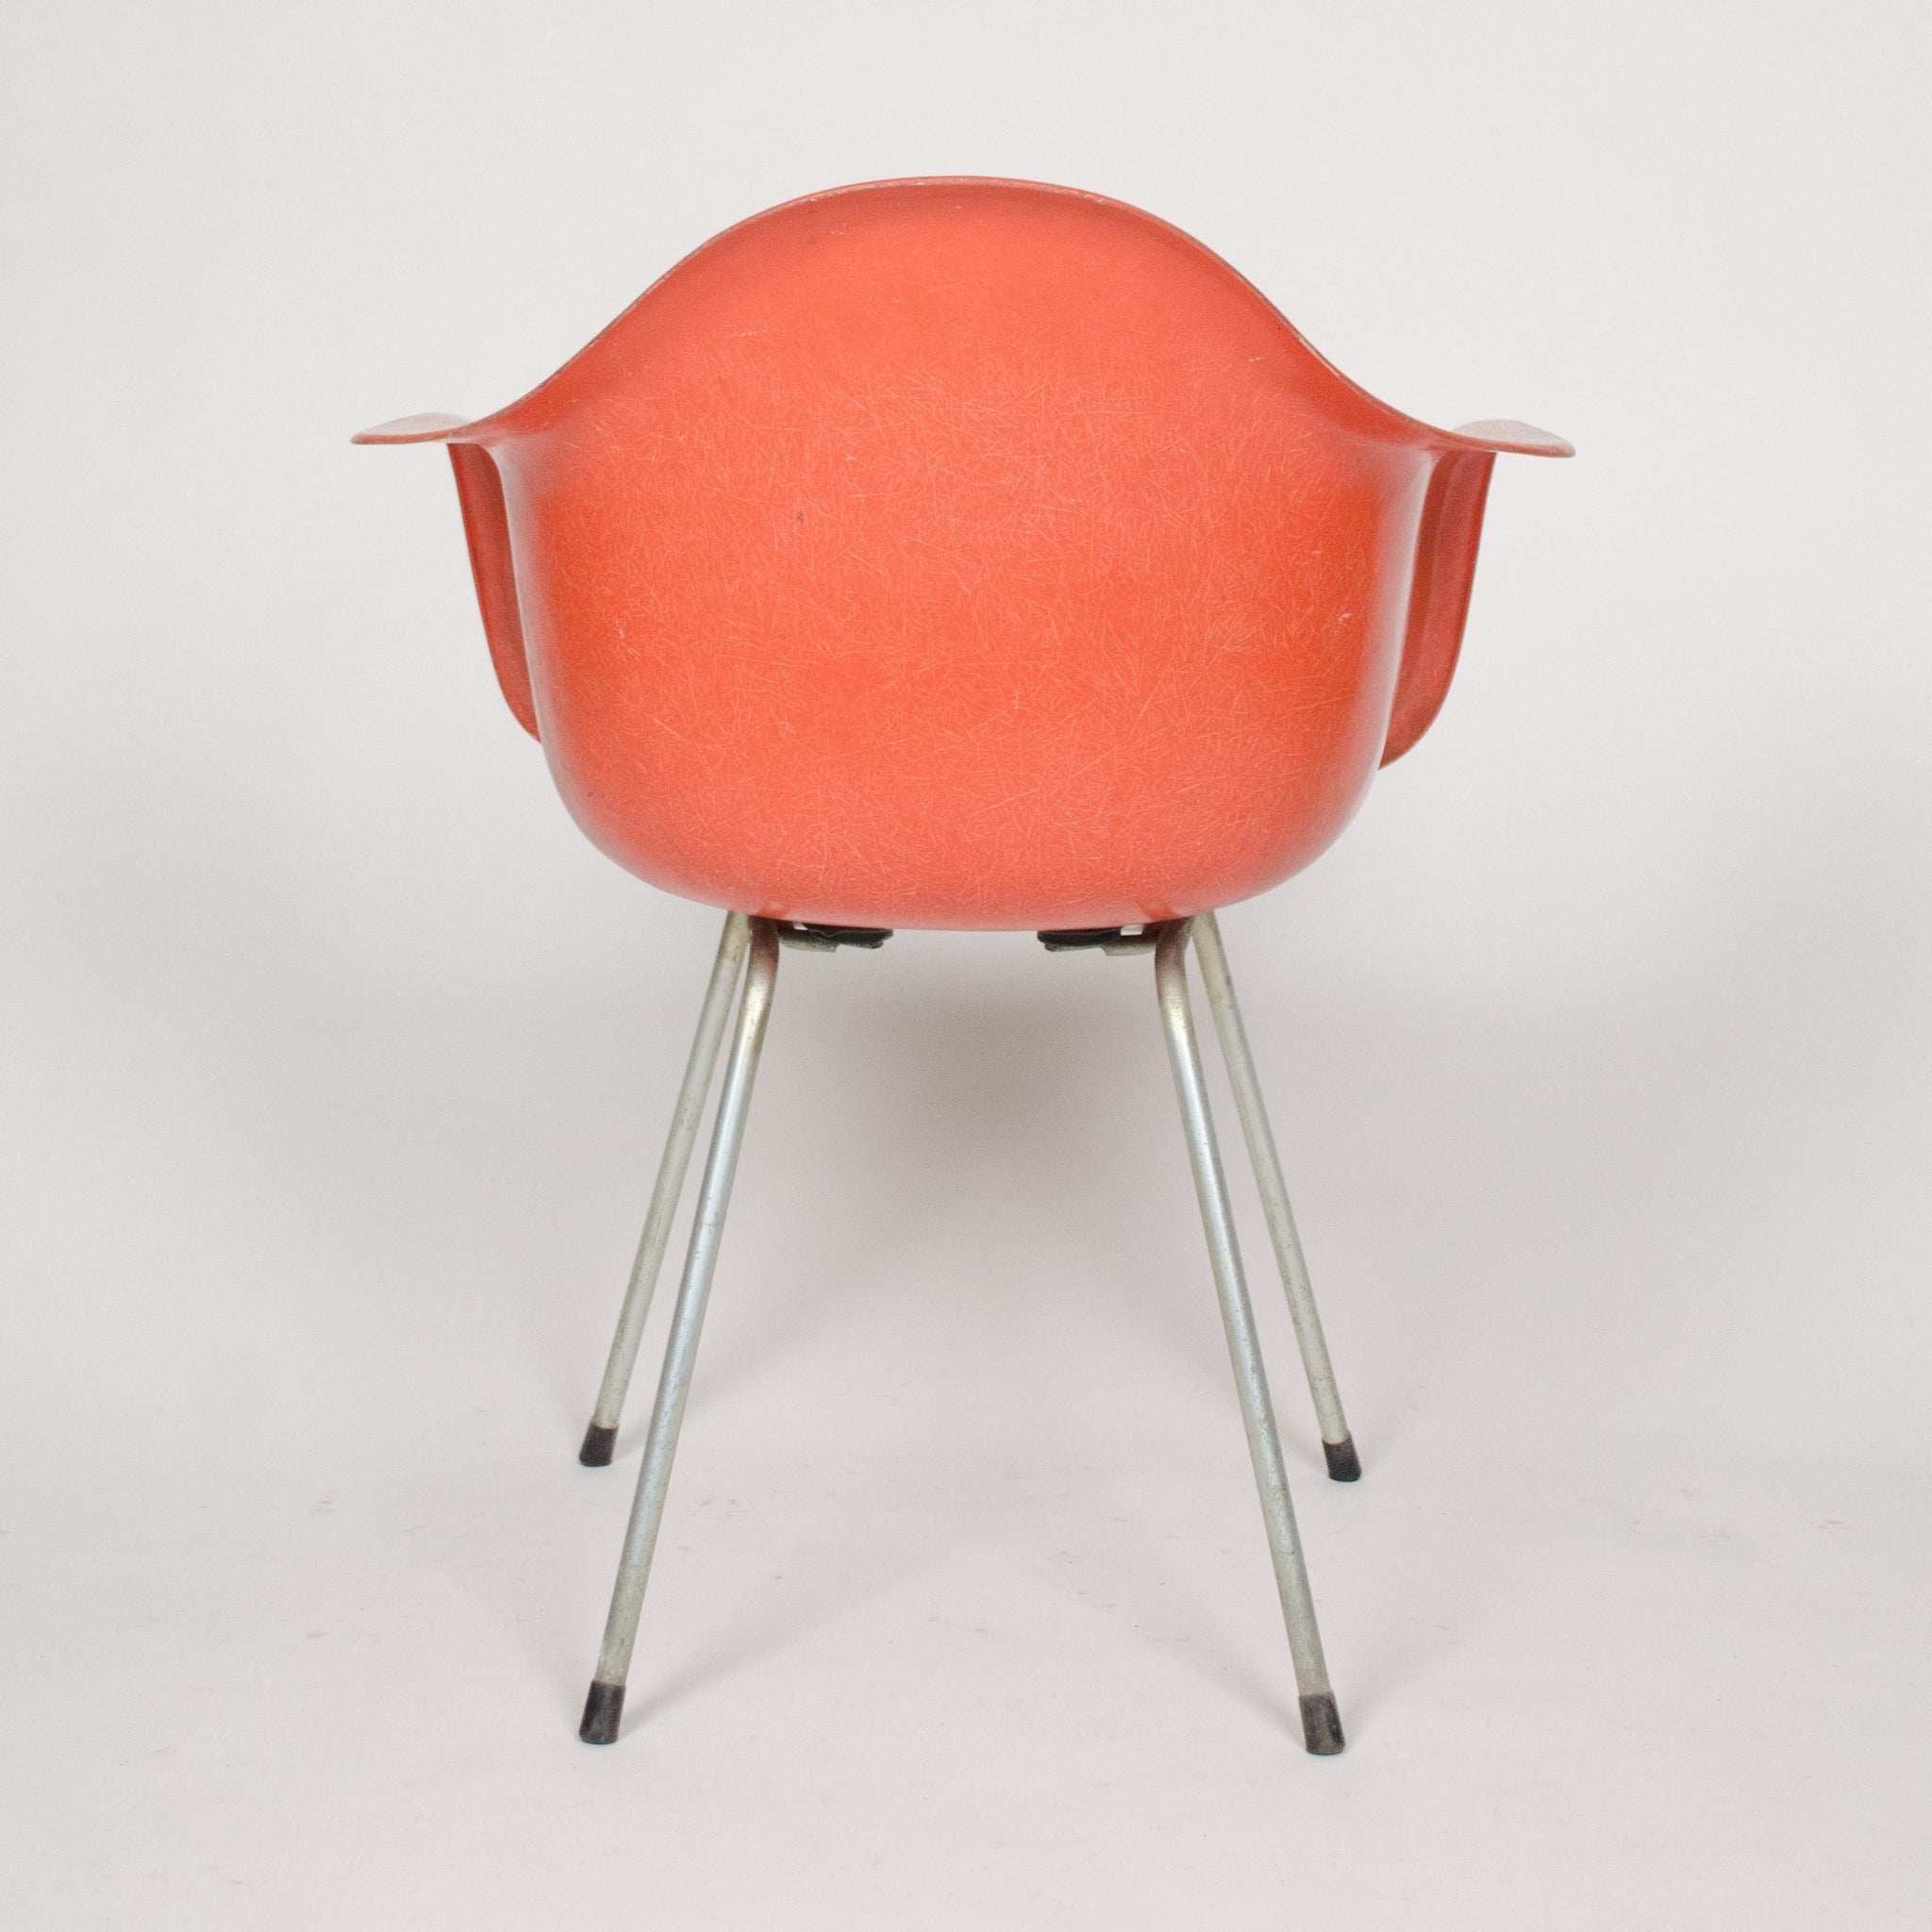 SOLD 1960's Eames Herman Miller Red / Orange Fiberglass Shell Chairs Arm Shells (3x)